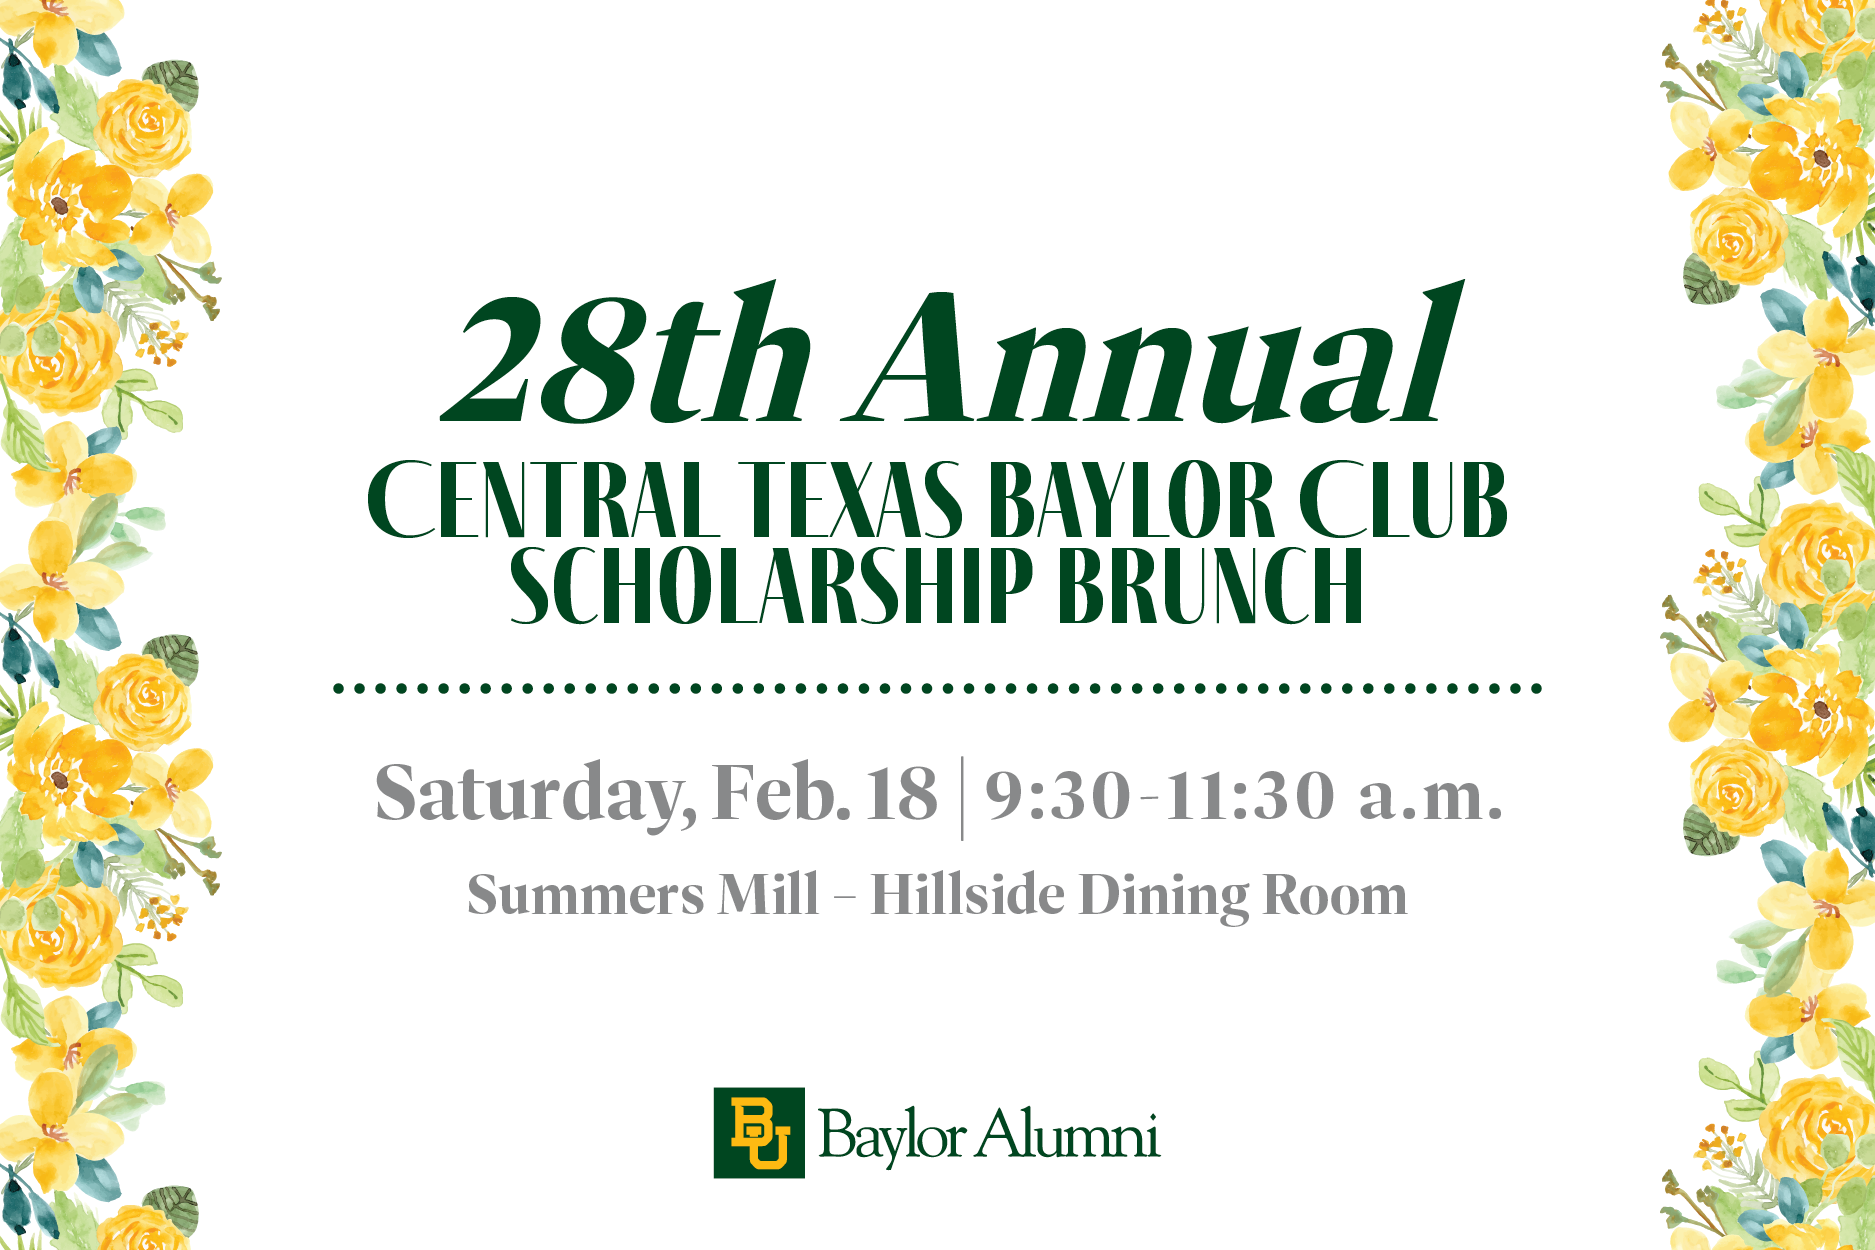 Central Texas Baylor Club Scholarship Brunch Banner